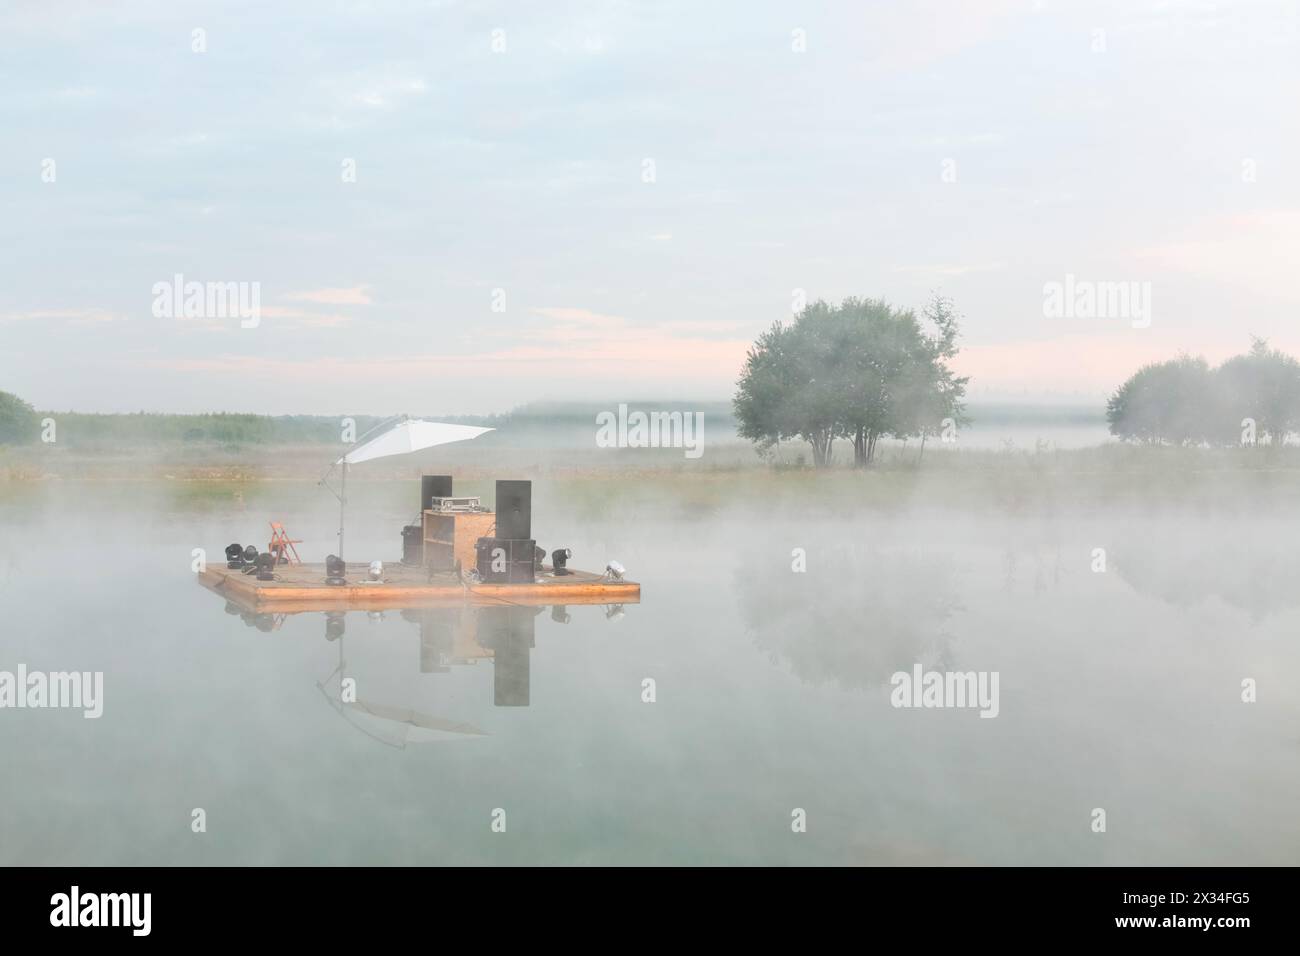 improvised scene with audio equipment on raft floating on river Ugra Stock Photo